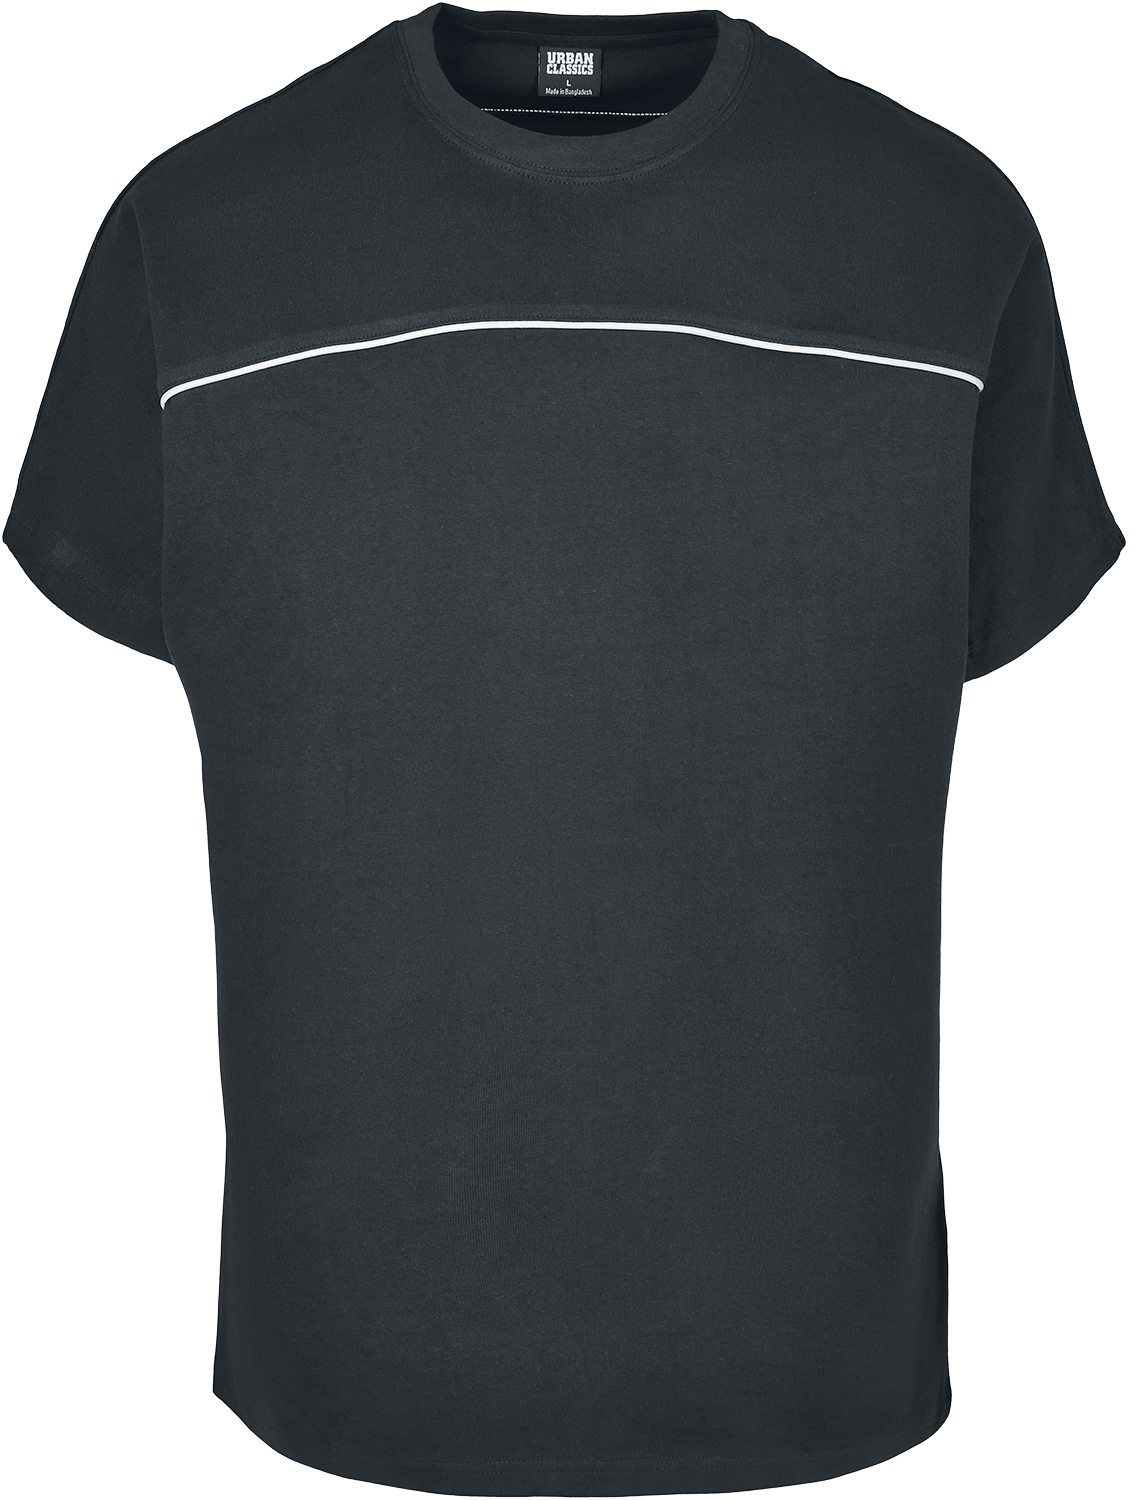 Urban Classics - Reflective Tee - T-Shirt - black image